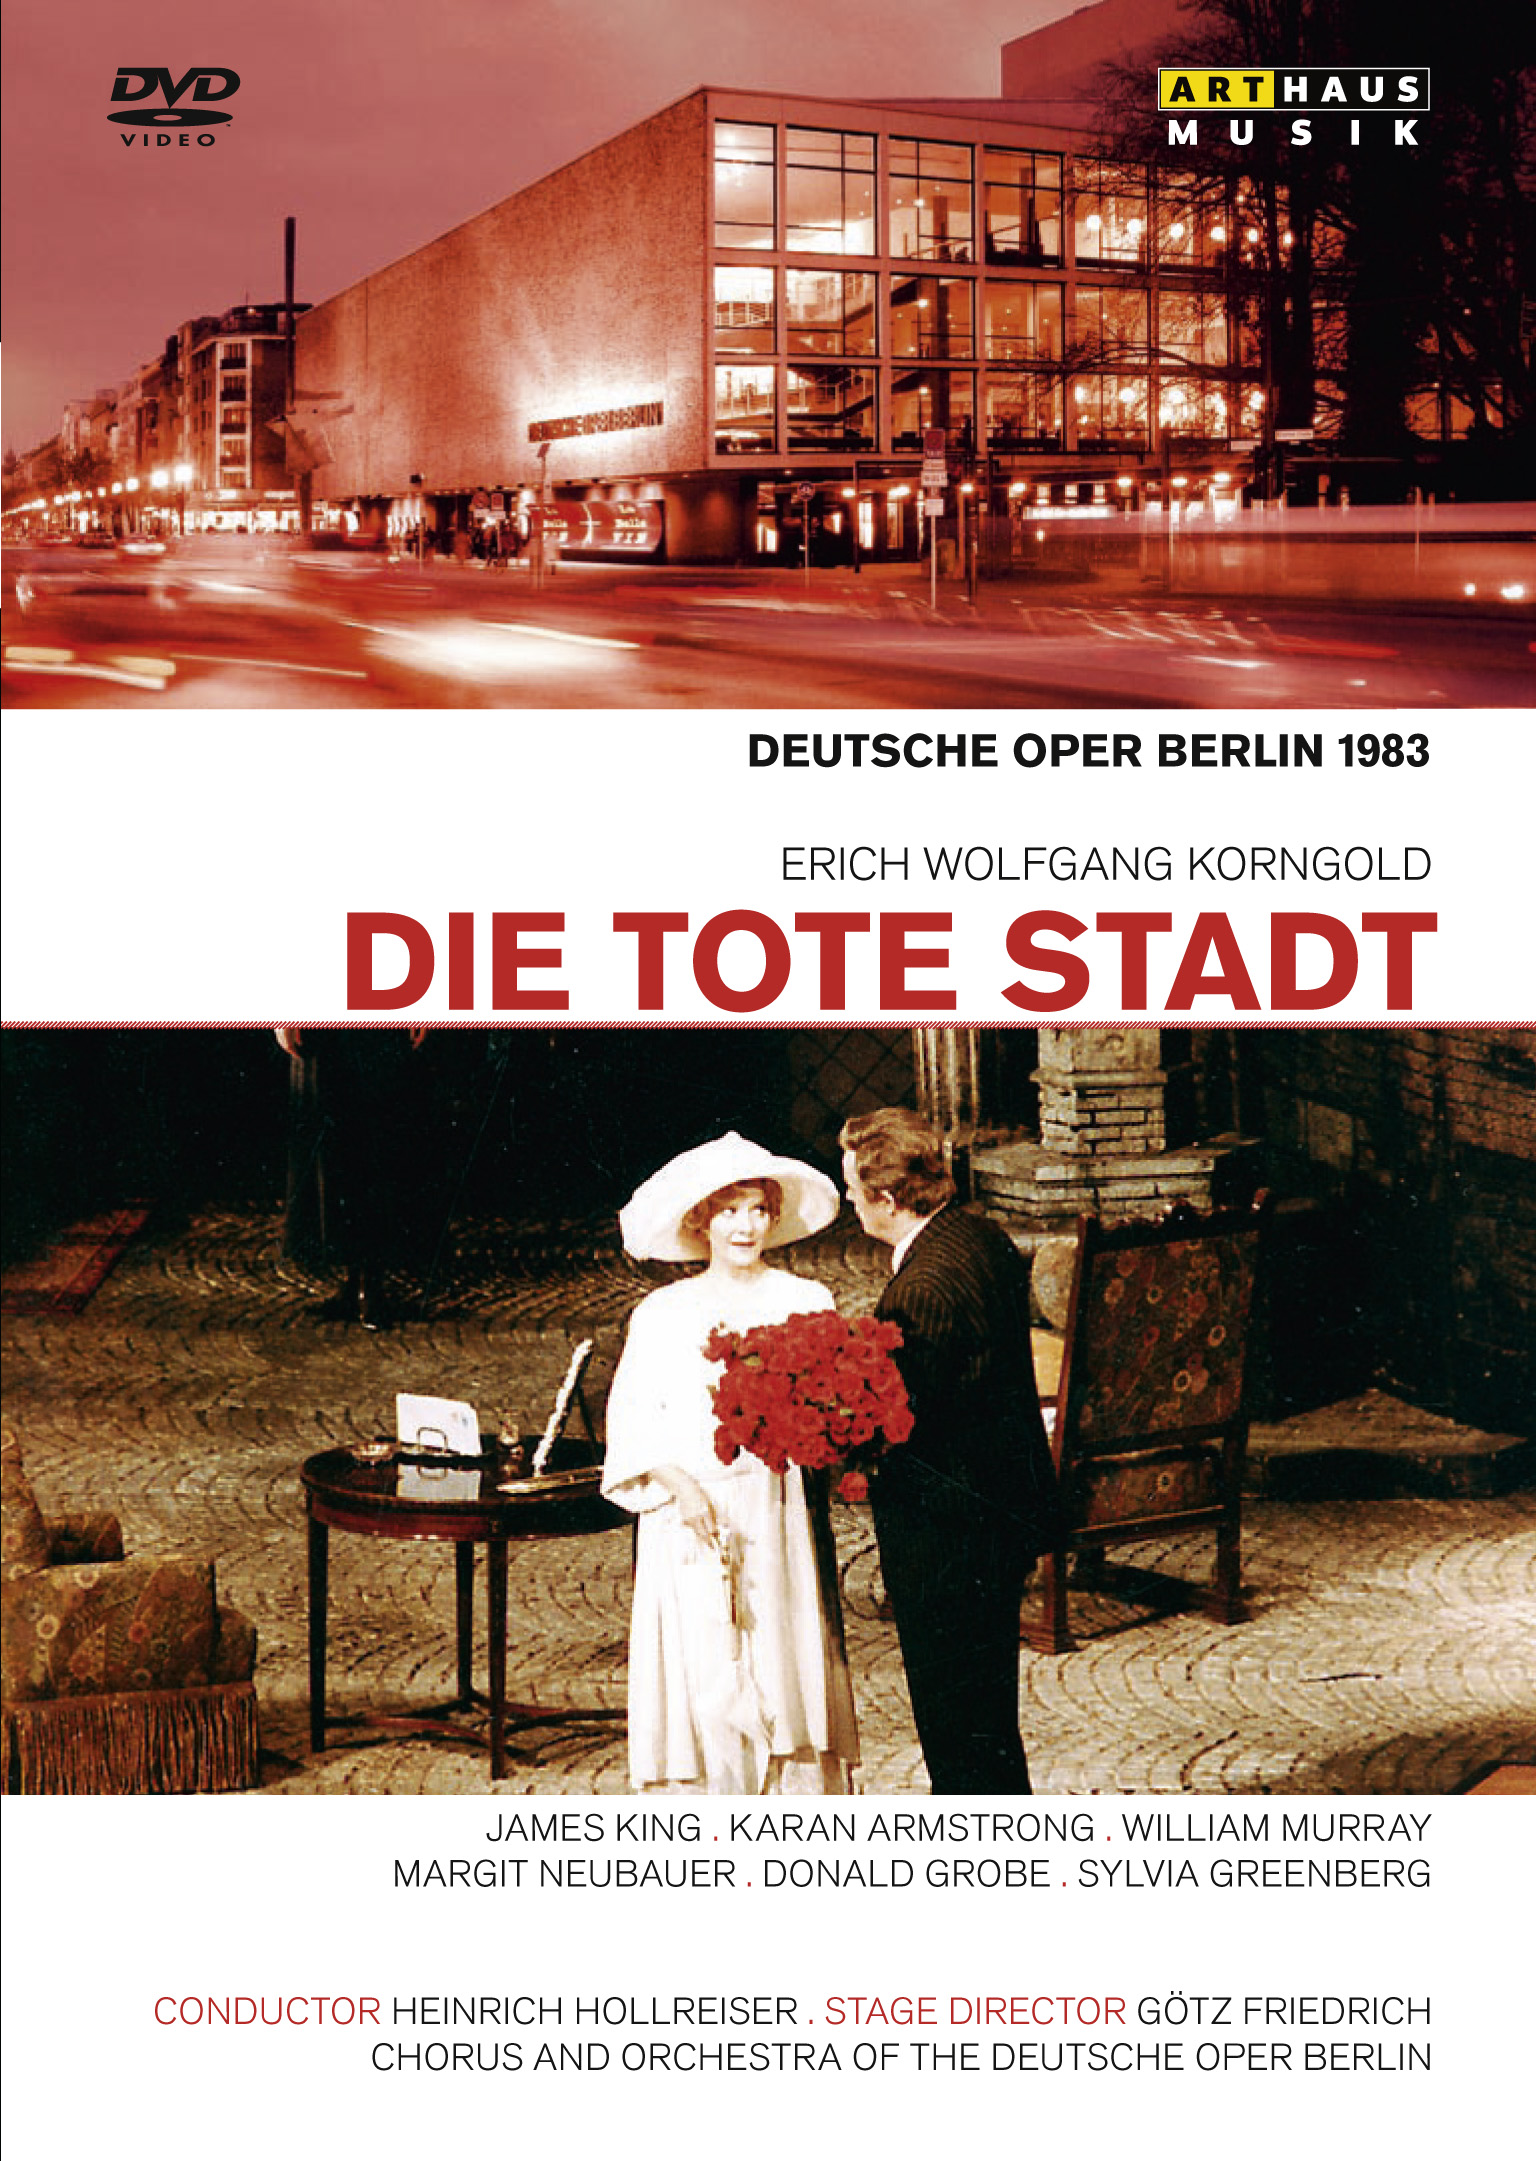 Erich Wolfgang Korngold : Die tote Stadt - Opera DVD - Arthaus Musik